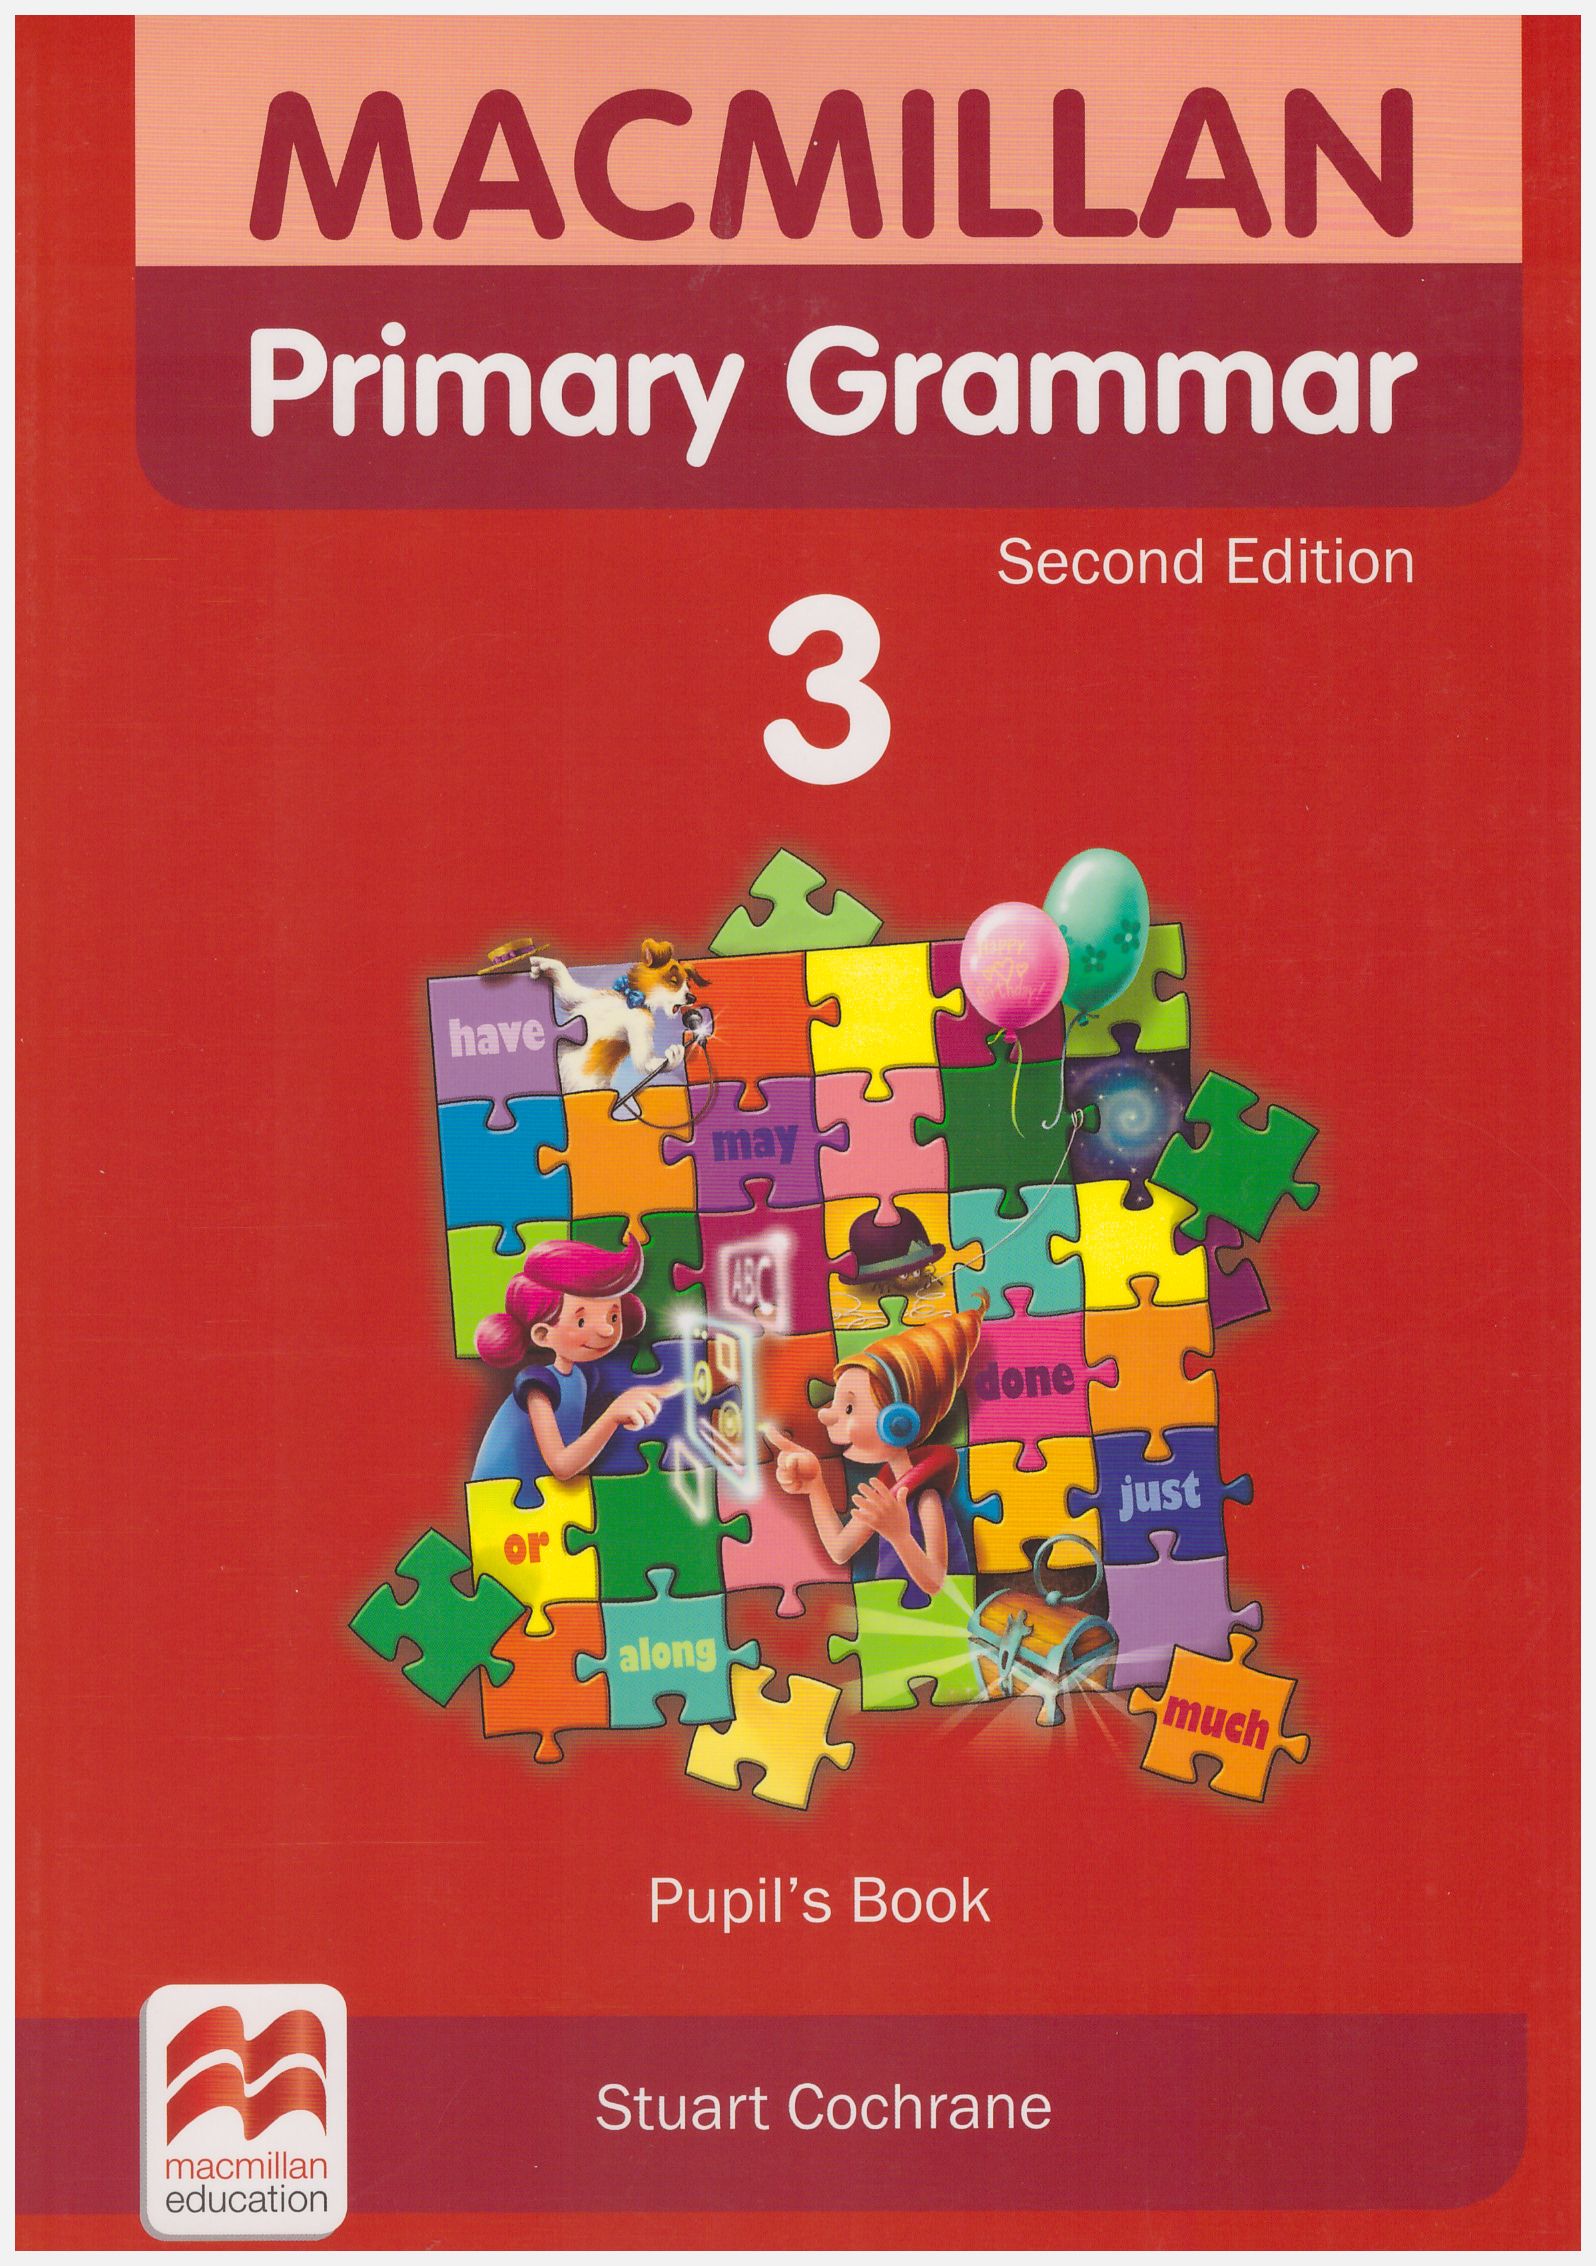 Macmillan s book. Английский Macmillan Primary Grammar. Macmillan Primary Grammar 2. Macmillan Grammar 3. Учебник Macmillan Primary Grammar.